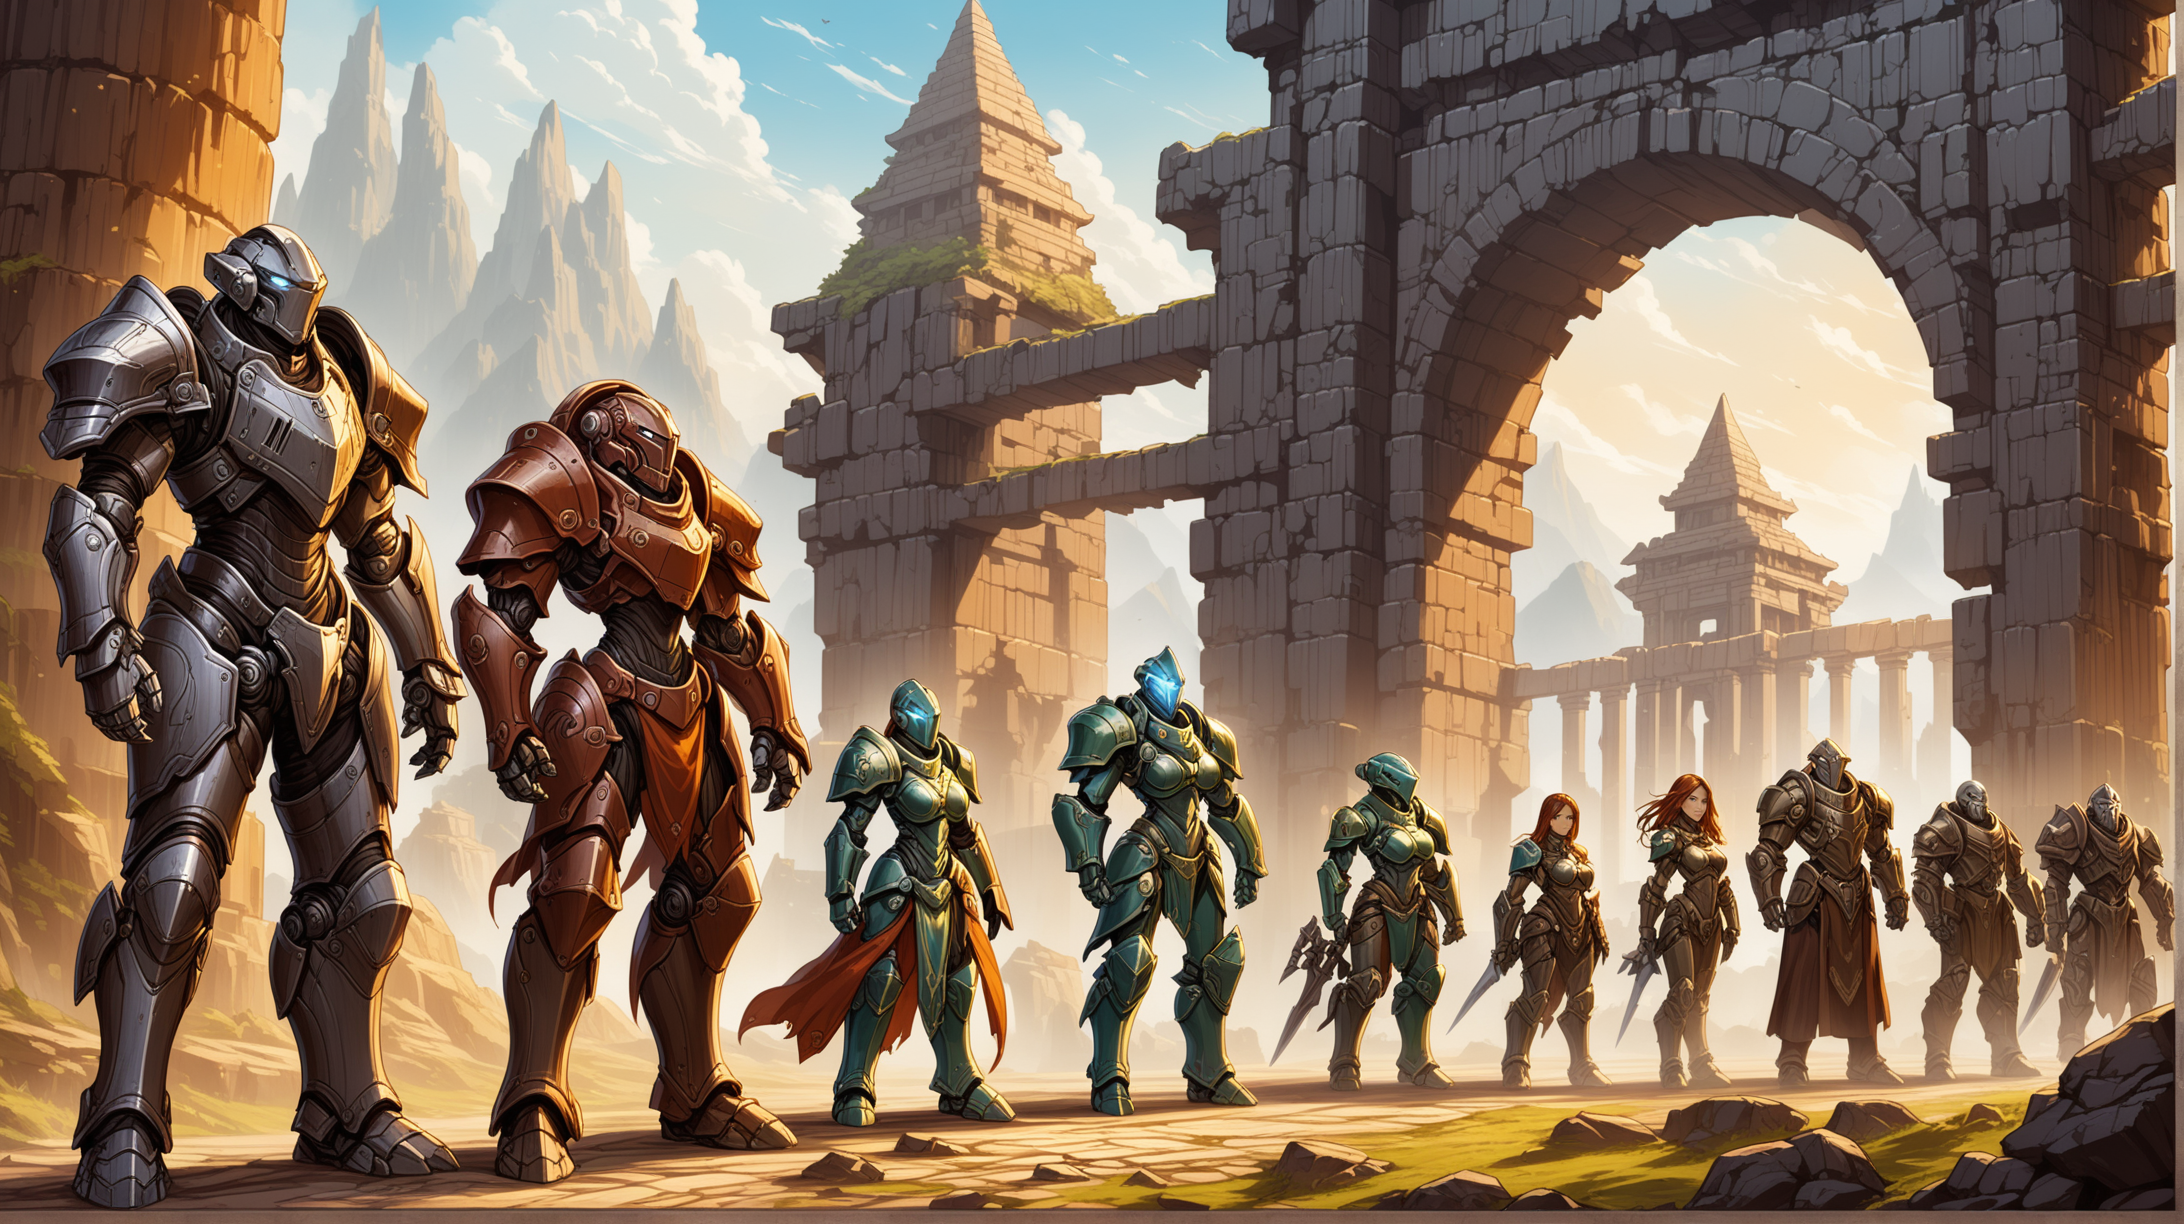 Android Construct Adventurers in Ancient Temple Ruins Eberron Fantasy Scene